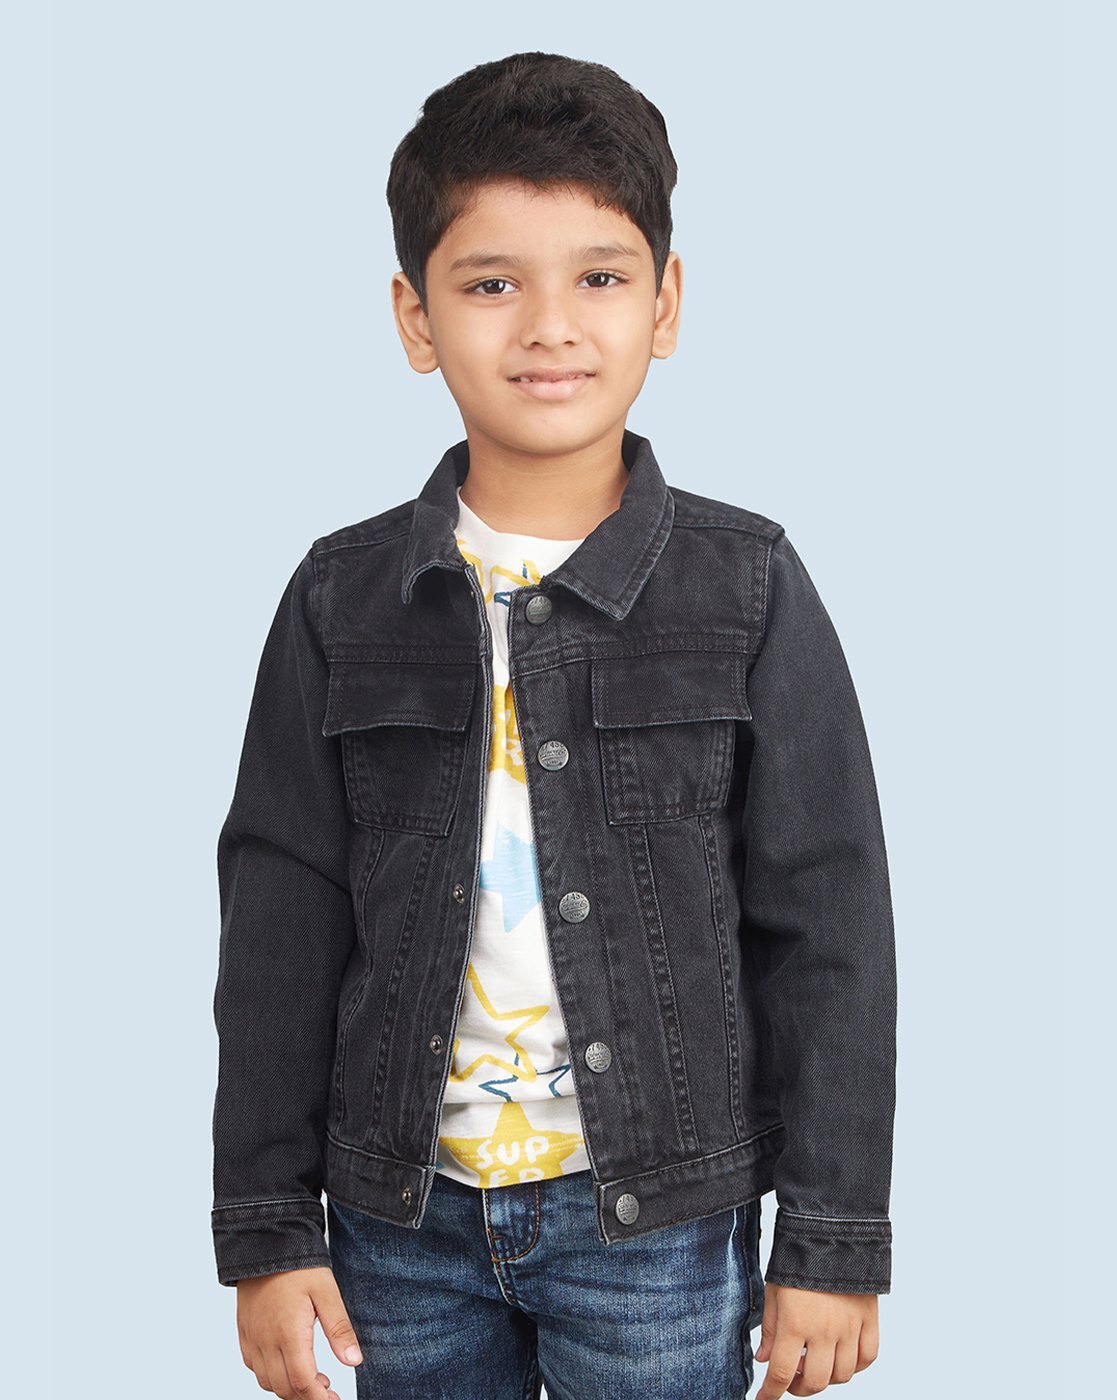 Tommy Hilfiger Jean jacket for boy Size M/12-14 New | eBay-atpcosmetics.com.vn